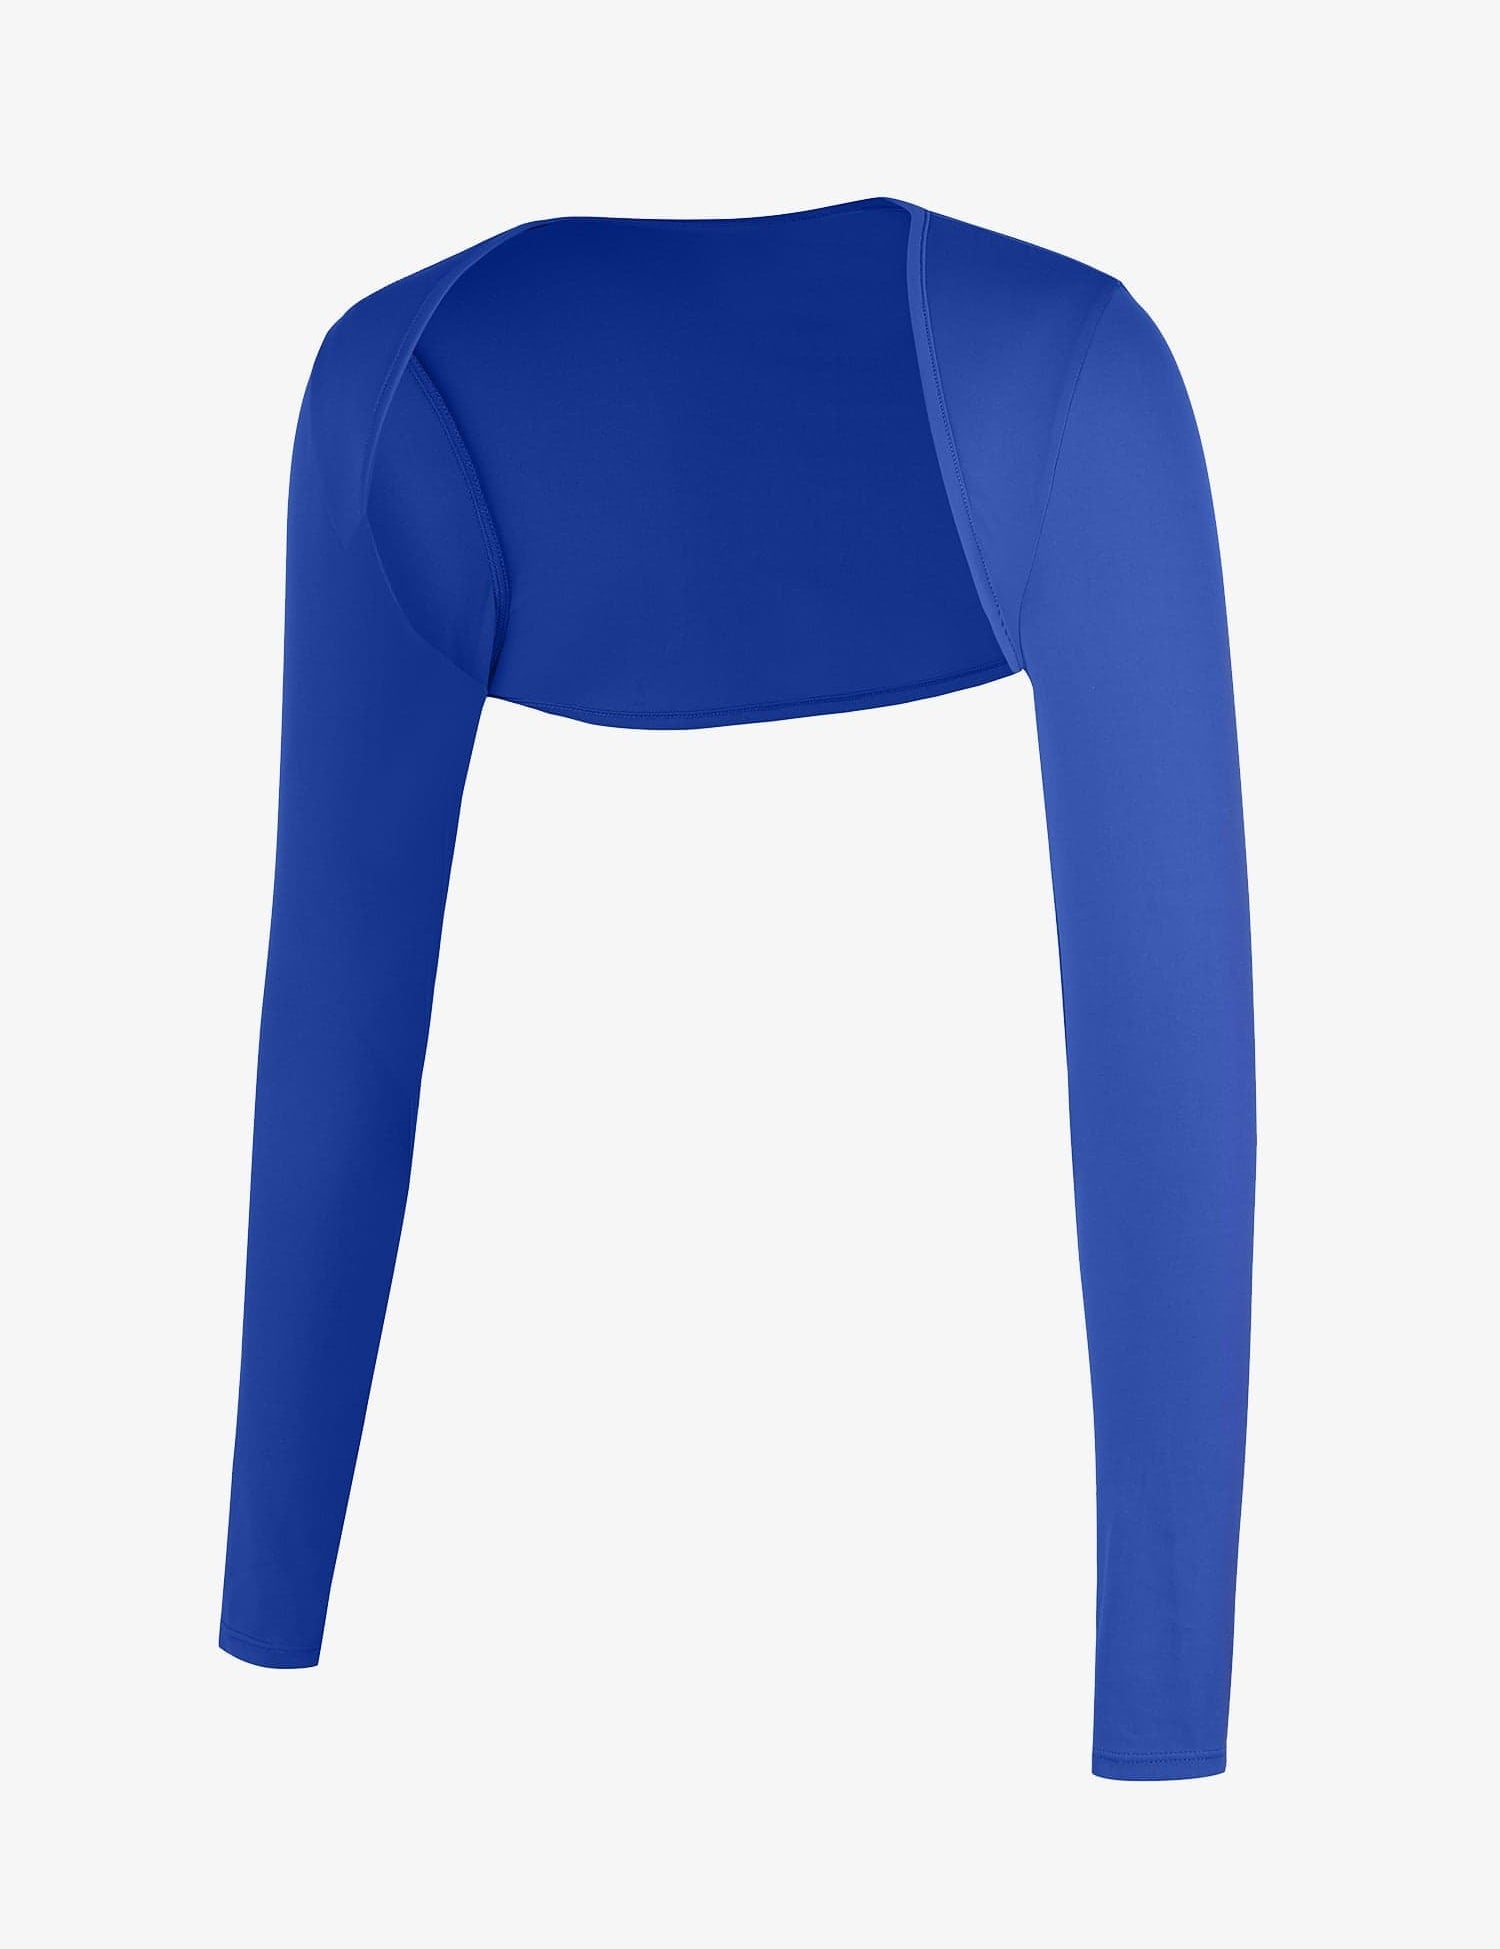 Popilush® Cooling Bodycon Summer Dress Set Bluetag Cooling Built-In Shapewear Tube Maxi Dress Or Shrug